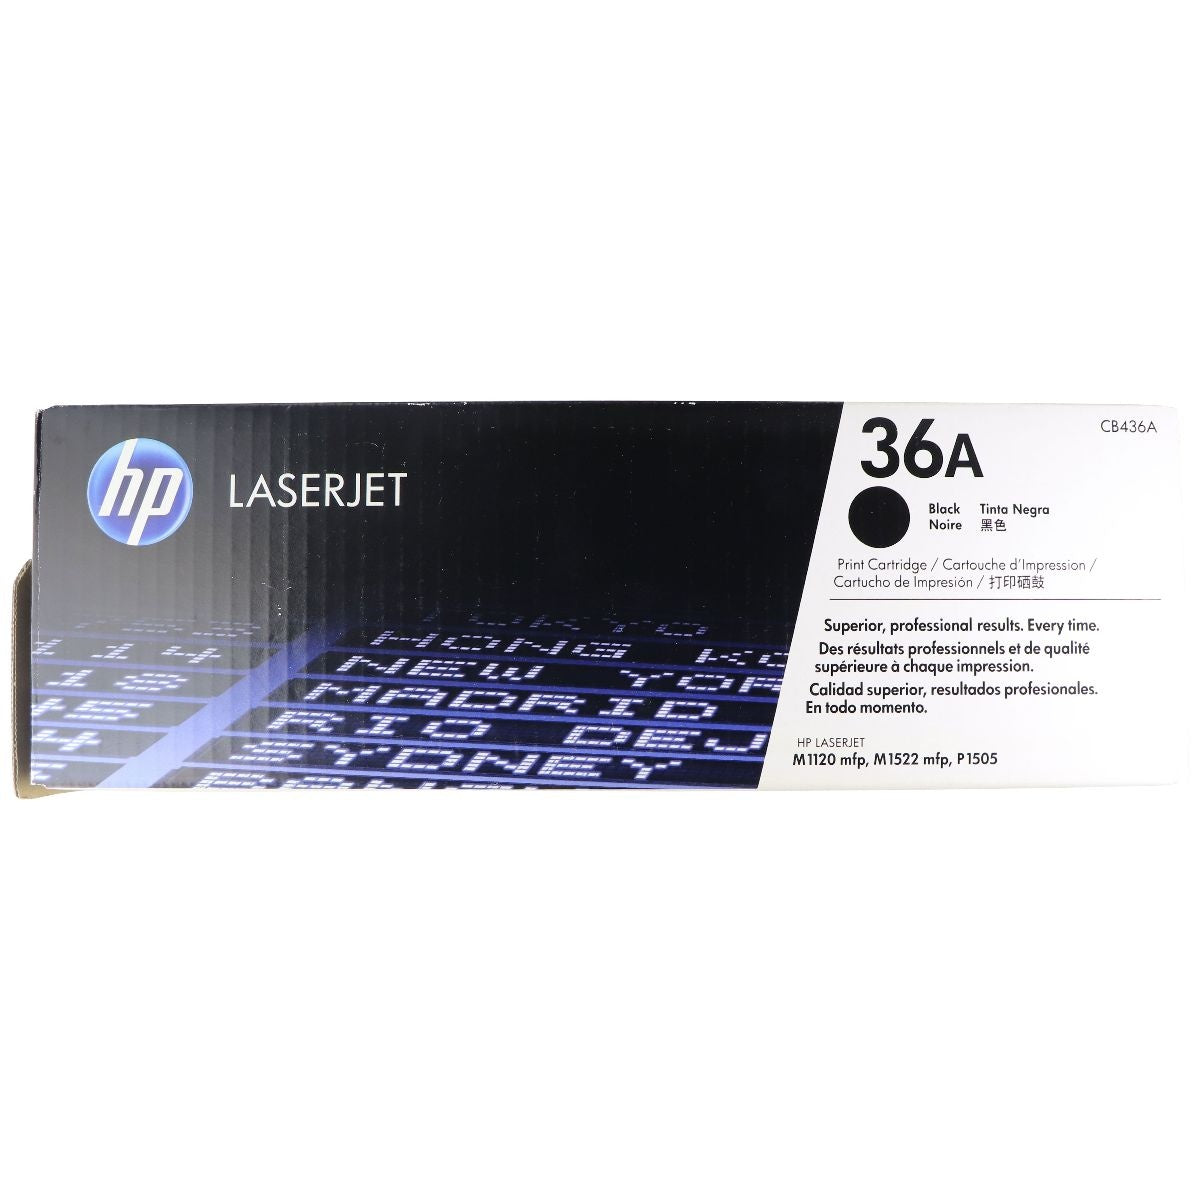 HP 36A Black Toner Cartridge For HP LaserJet M1120 MFP Series Printer Accessories - Toner Cartridges HP    - Simple Cell Bulk Wholesale Pricing - USA Seller